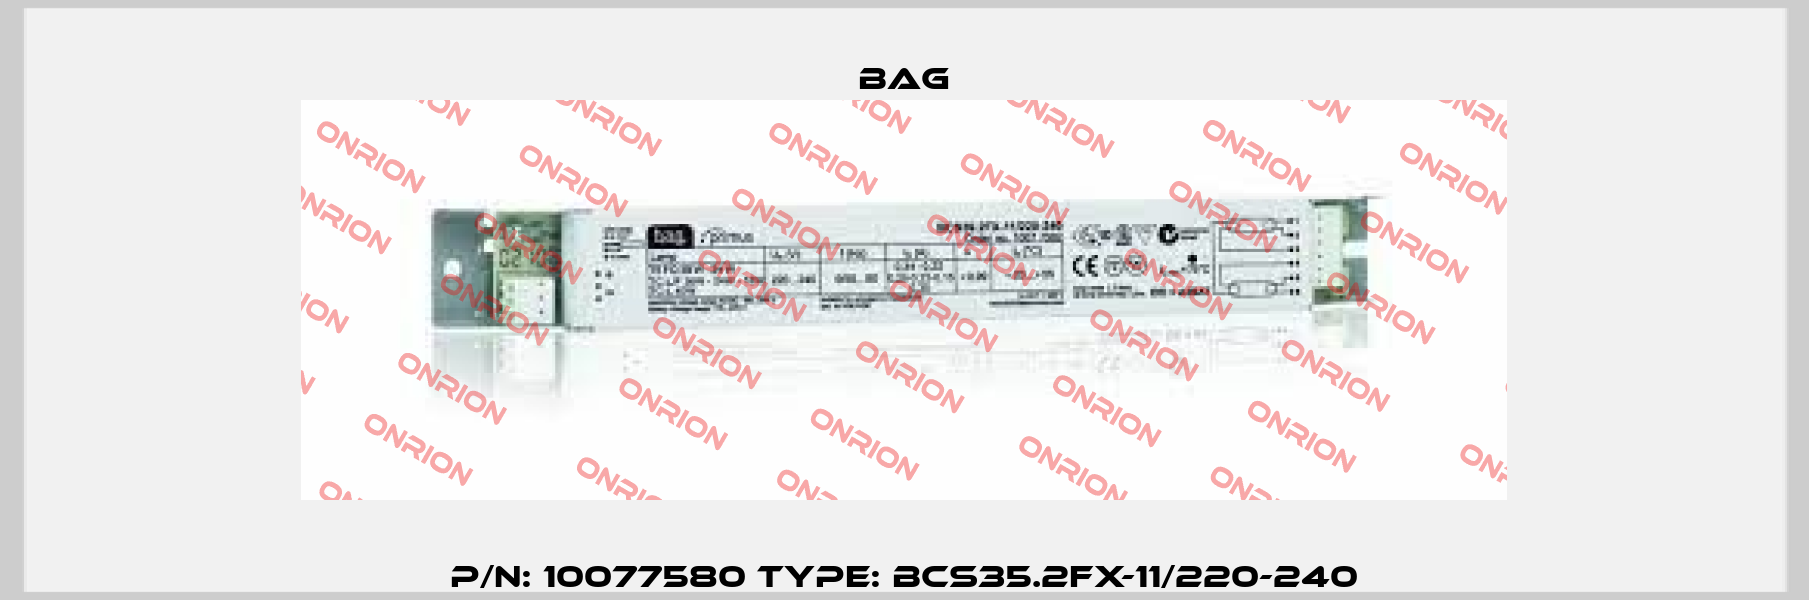 P/N: 10077580 Type: BCS35.2FX-11/220-240 Bag